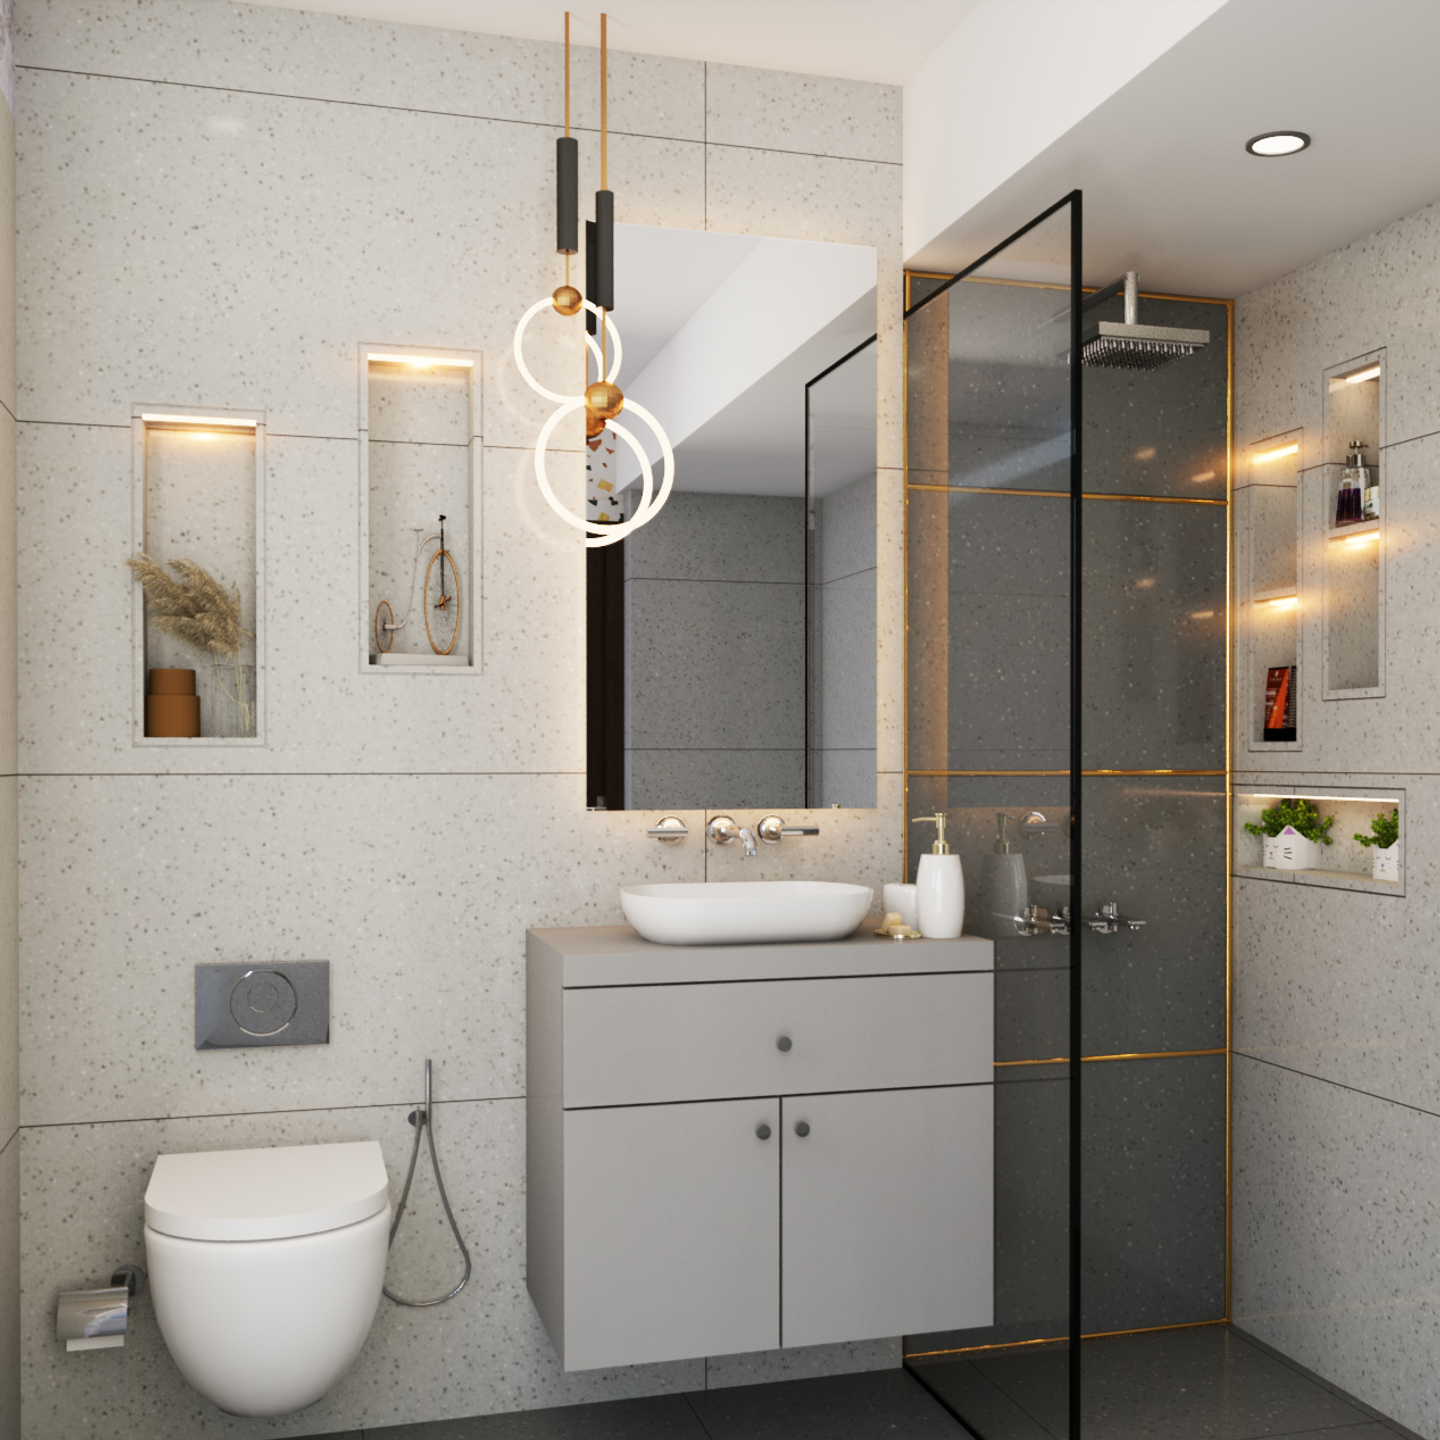 Bathroom Design In Grey And White - Livspace